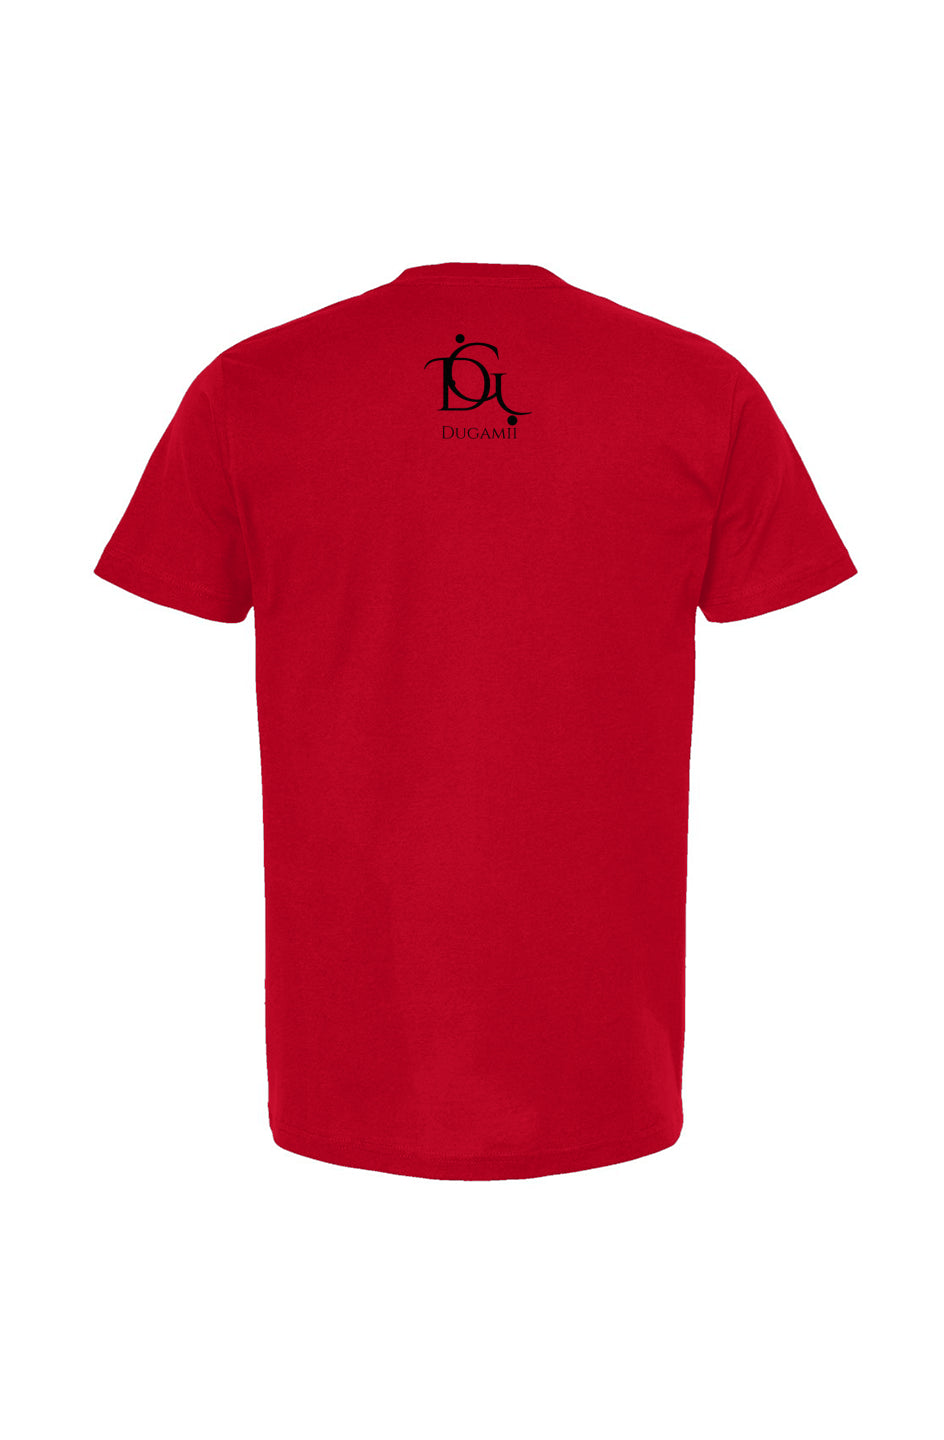 DuGamii Unisex "Eagle of America" Red T Shirt